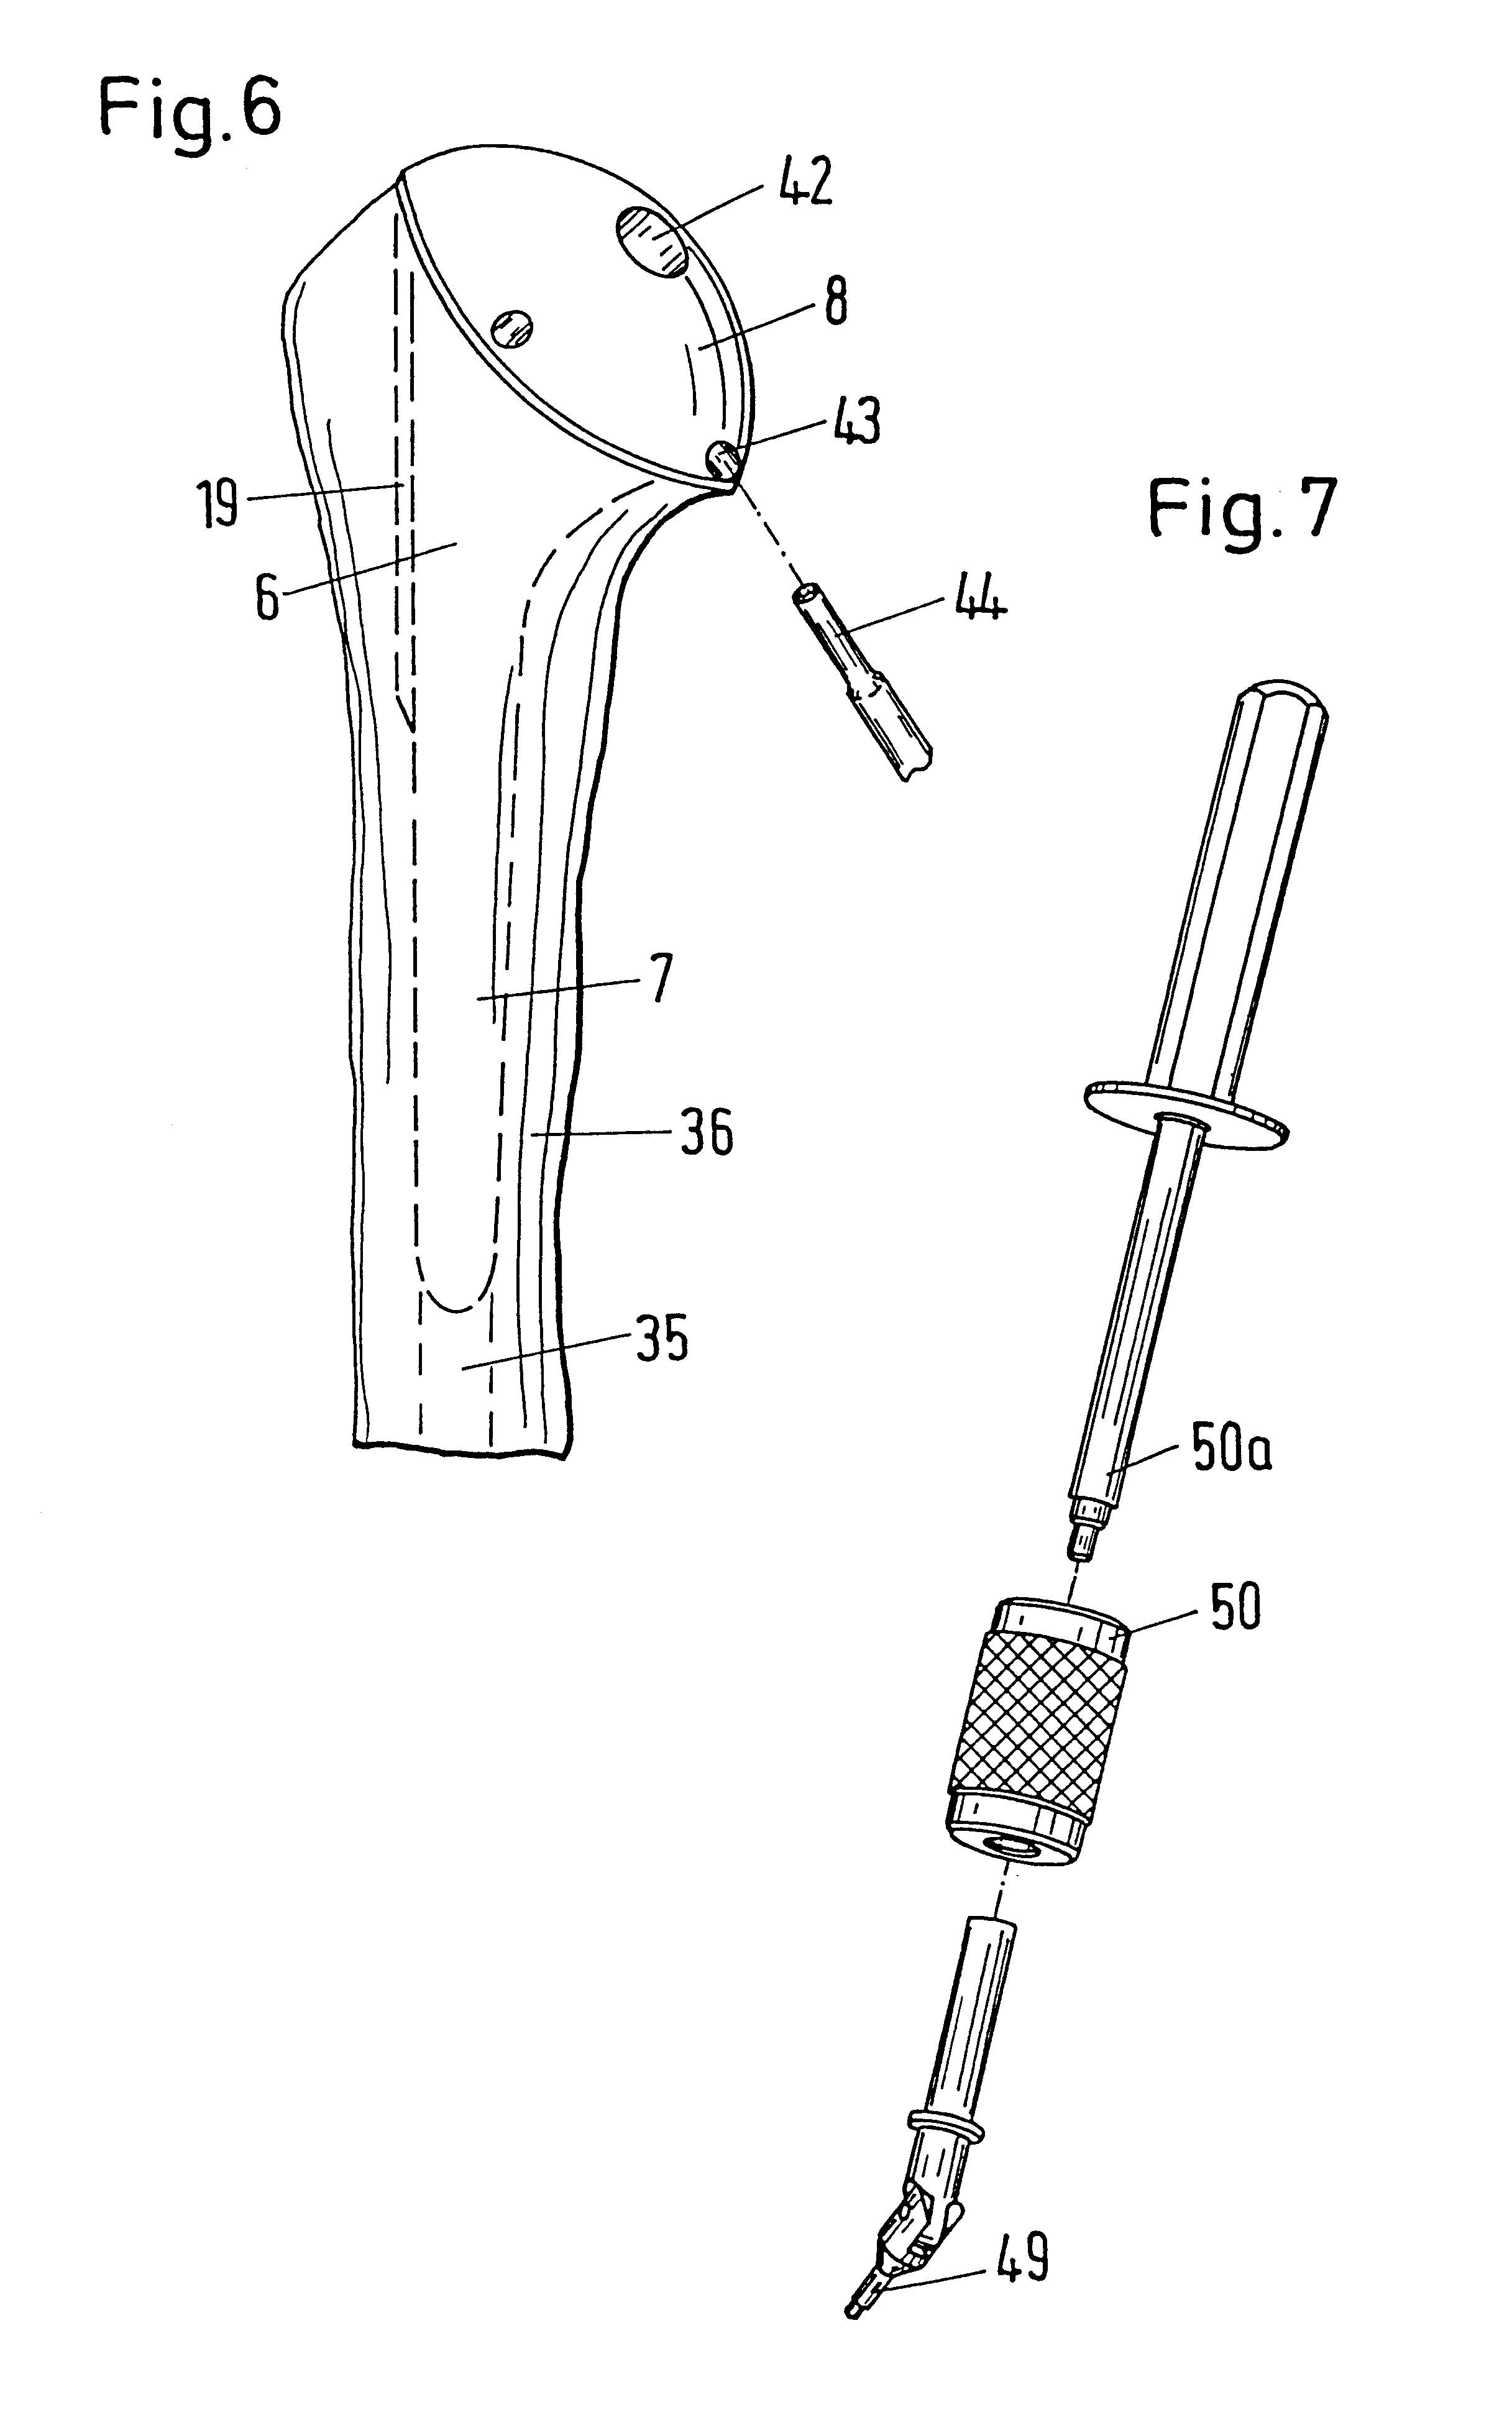 Modular system for shaft prostheses